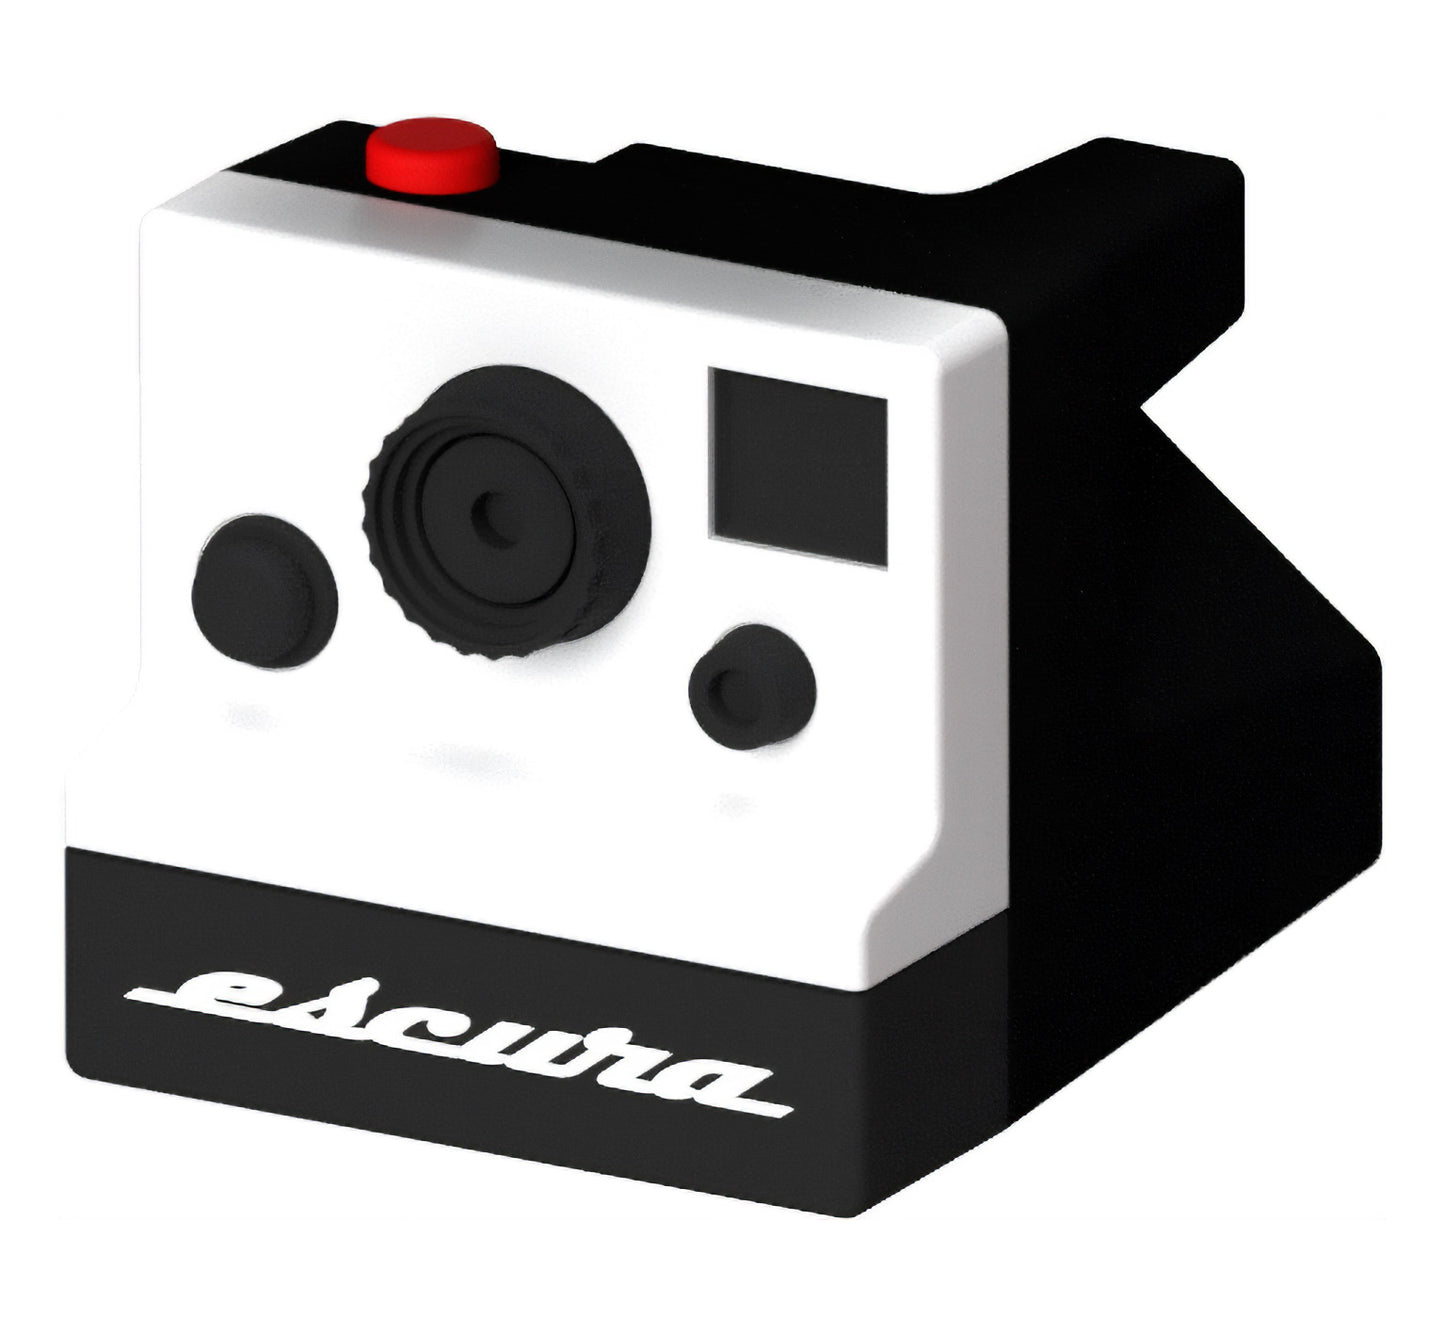 Escura 迷你數碼相機 Retro-1